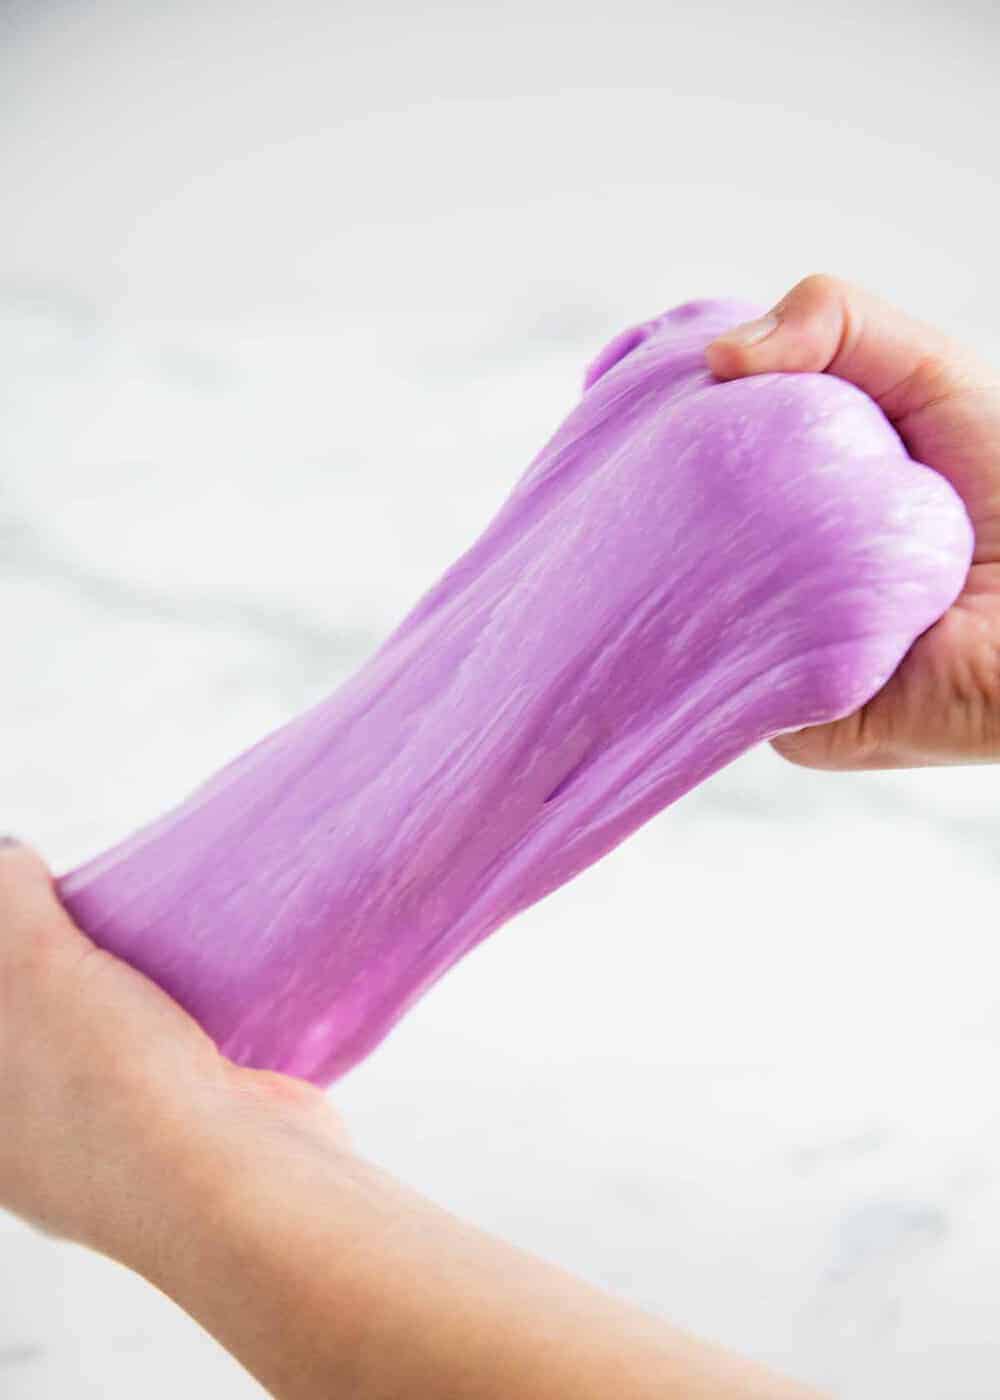 Hands pulling purple slime.